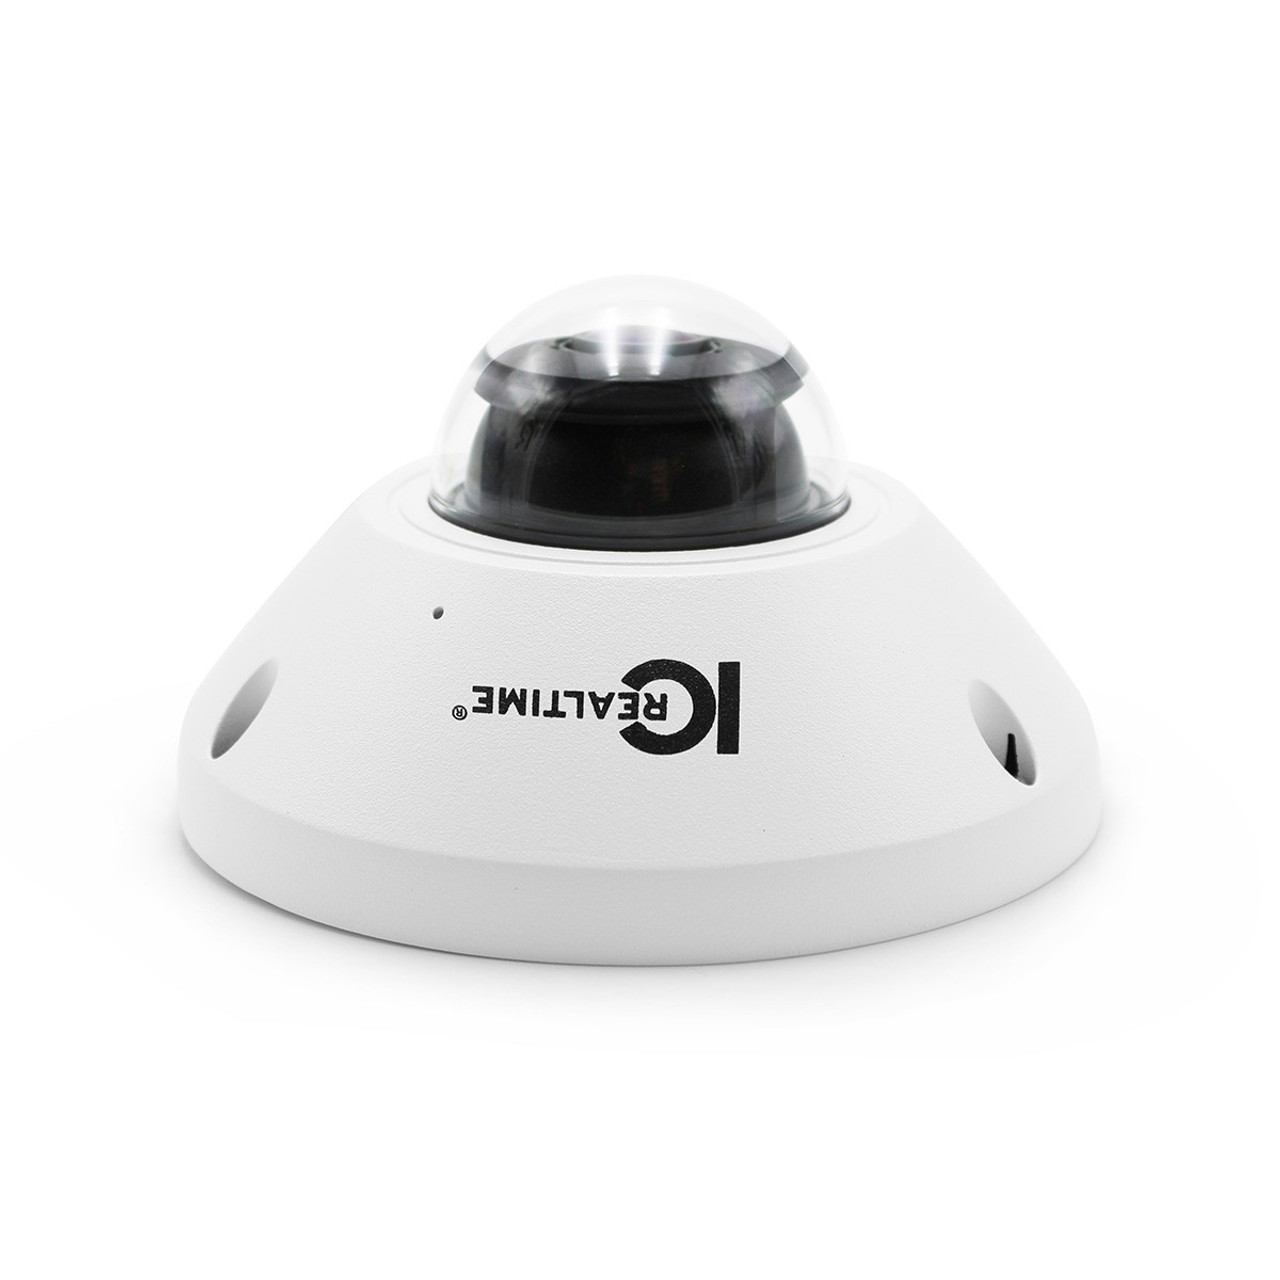 IC Realtime 5MP 1.4mm Fisheye Lens 360 Spherical Vandal PoE Dome IP Camera